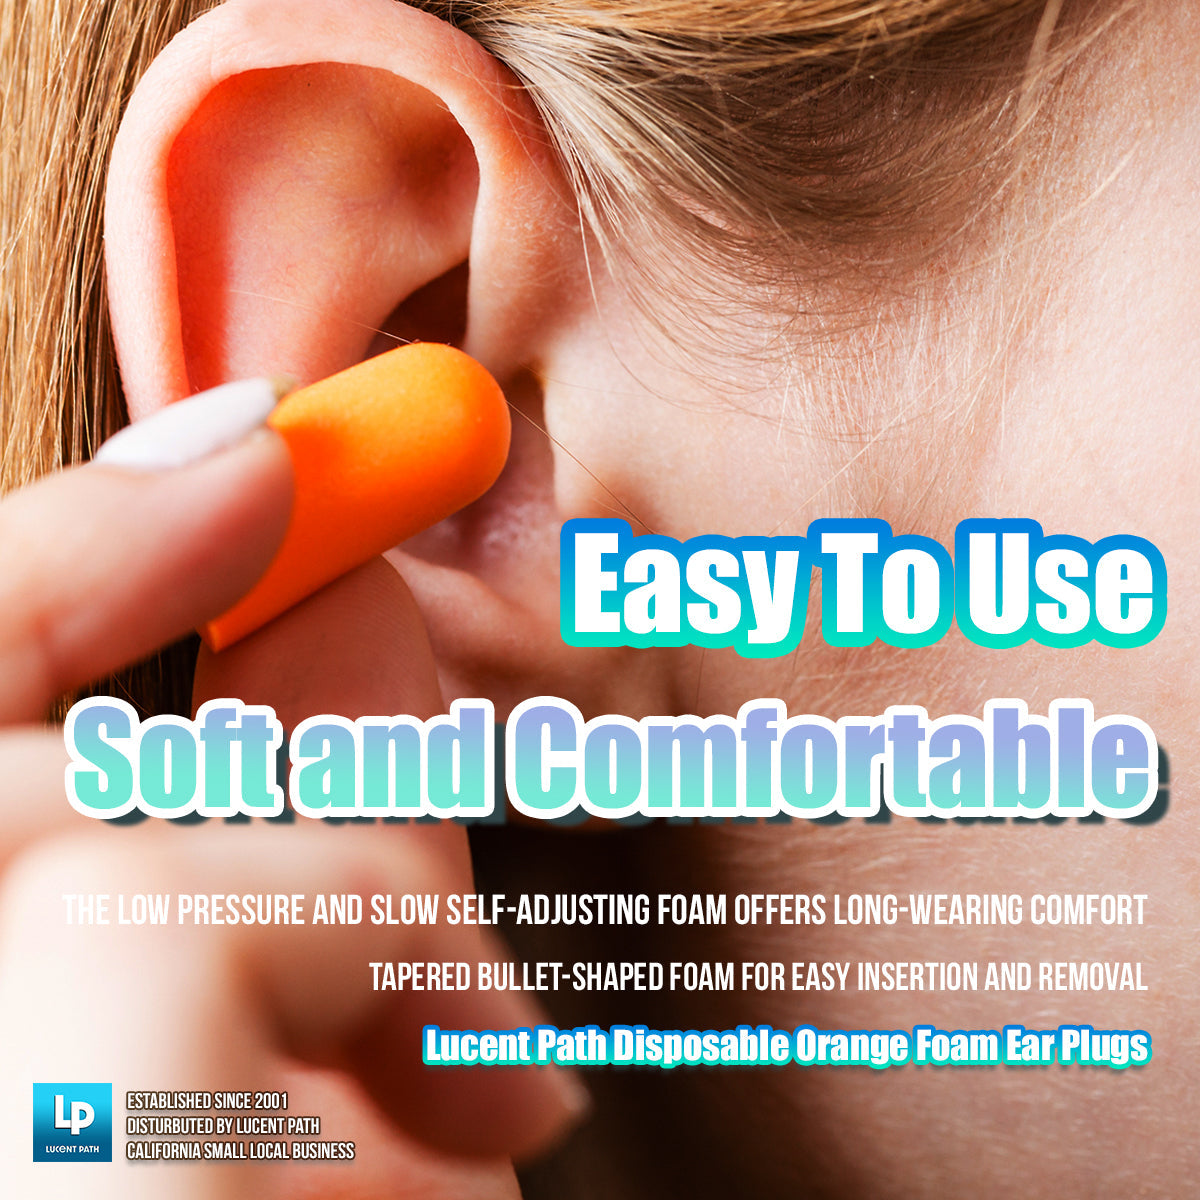 Lucent Path Disposable Orange Foam Ear plugs